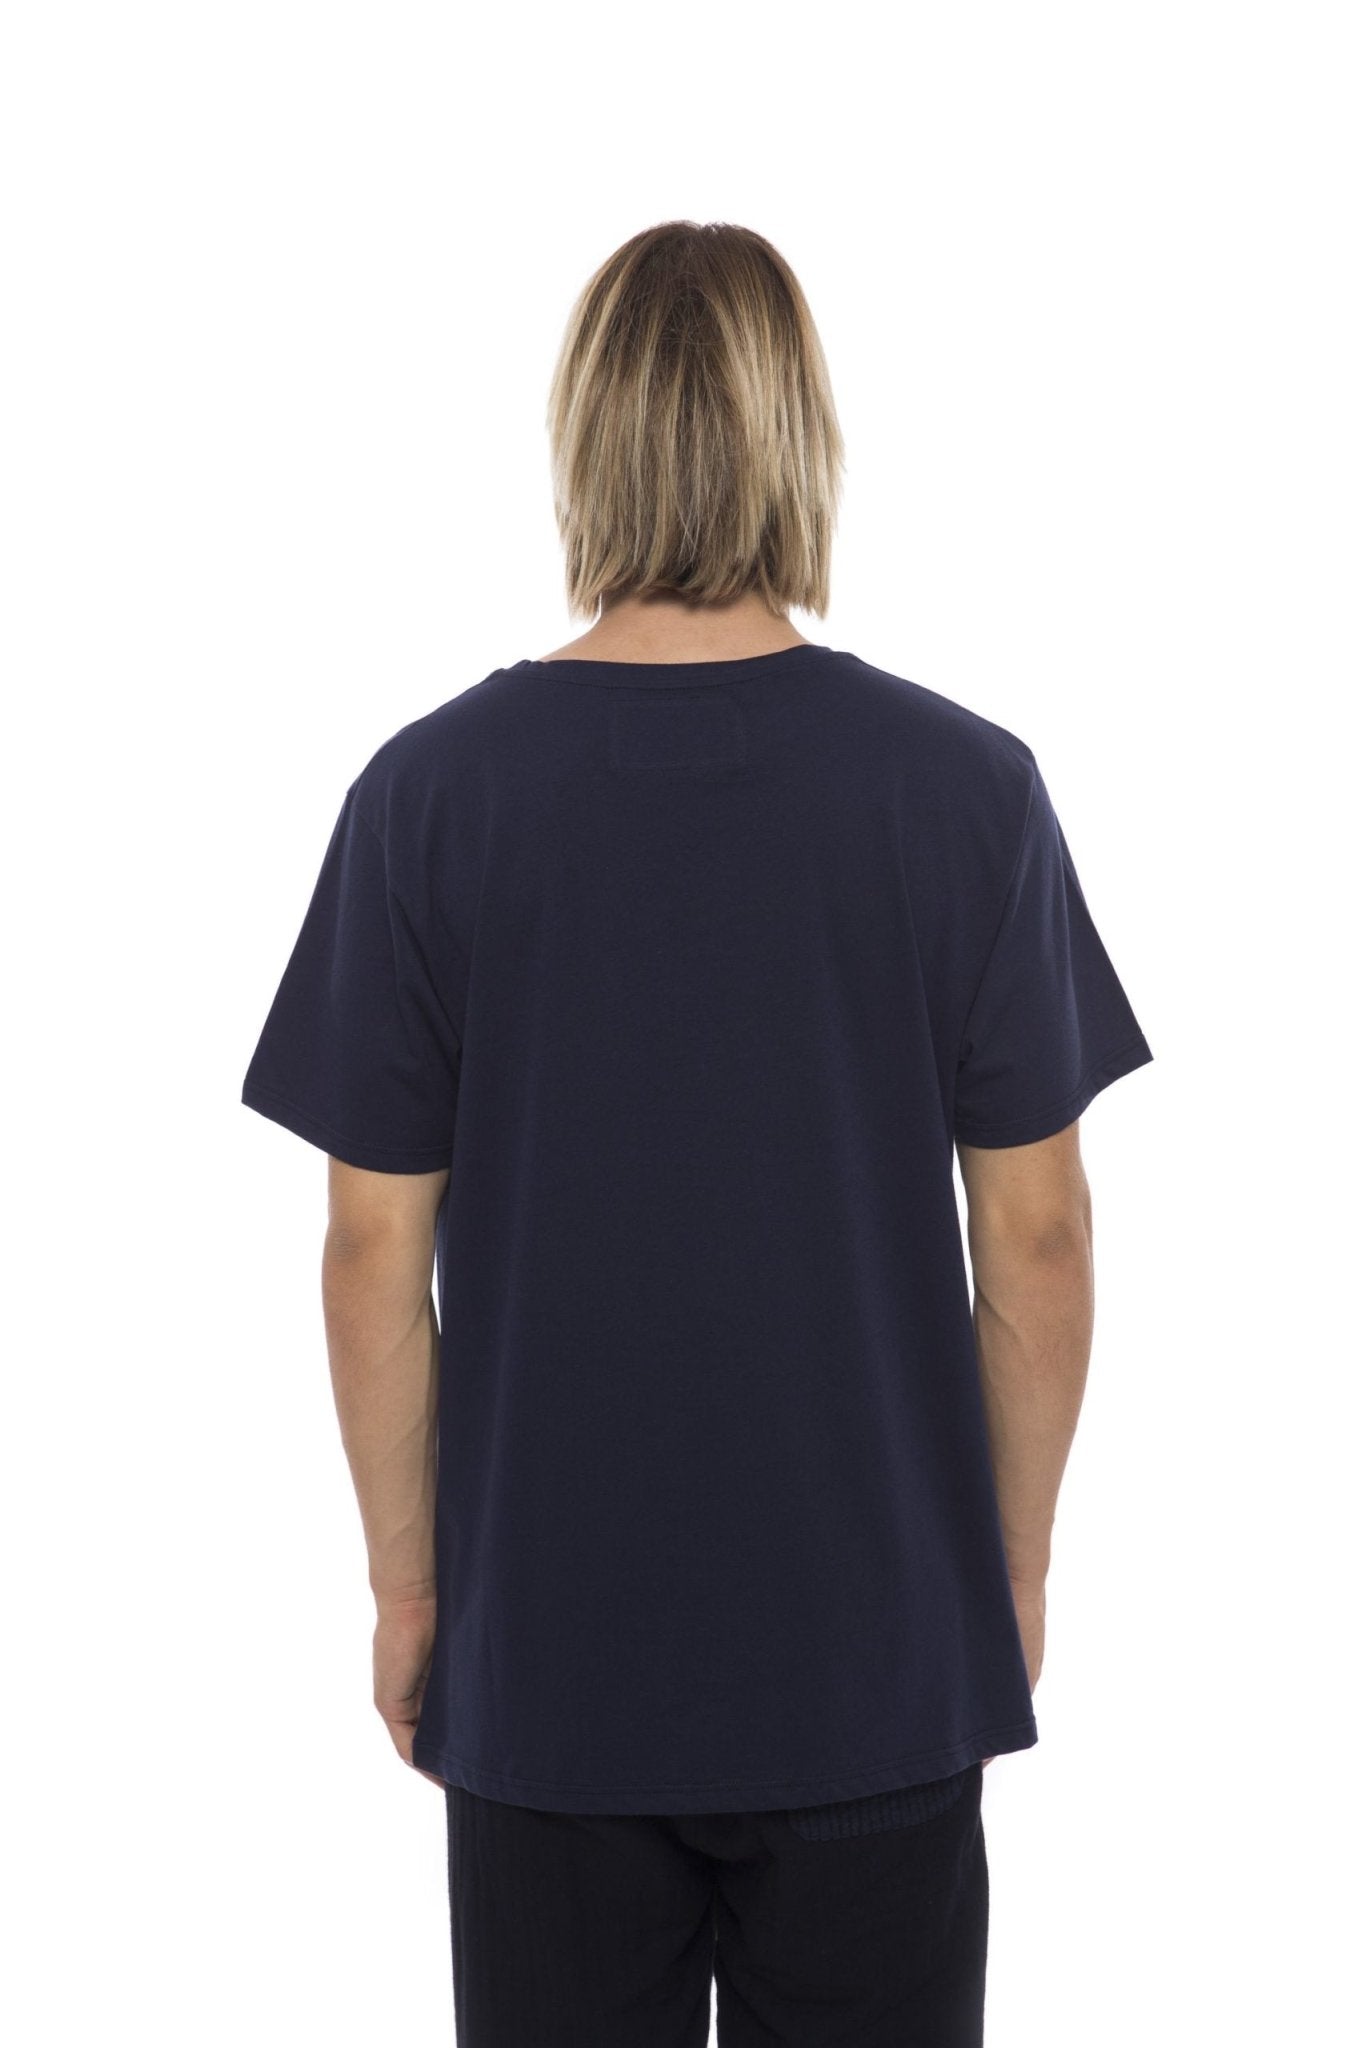 Nicolo Tonetto Blue Cotton T-Shirt - Fizigo